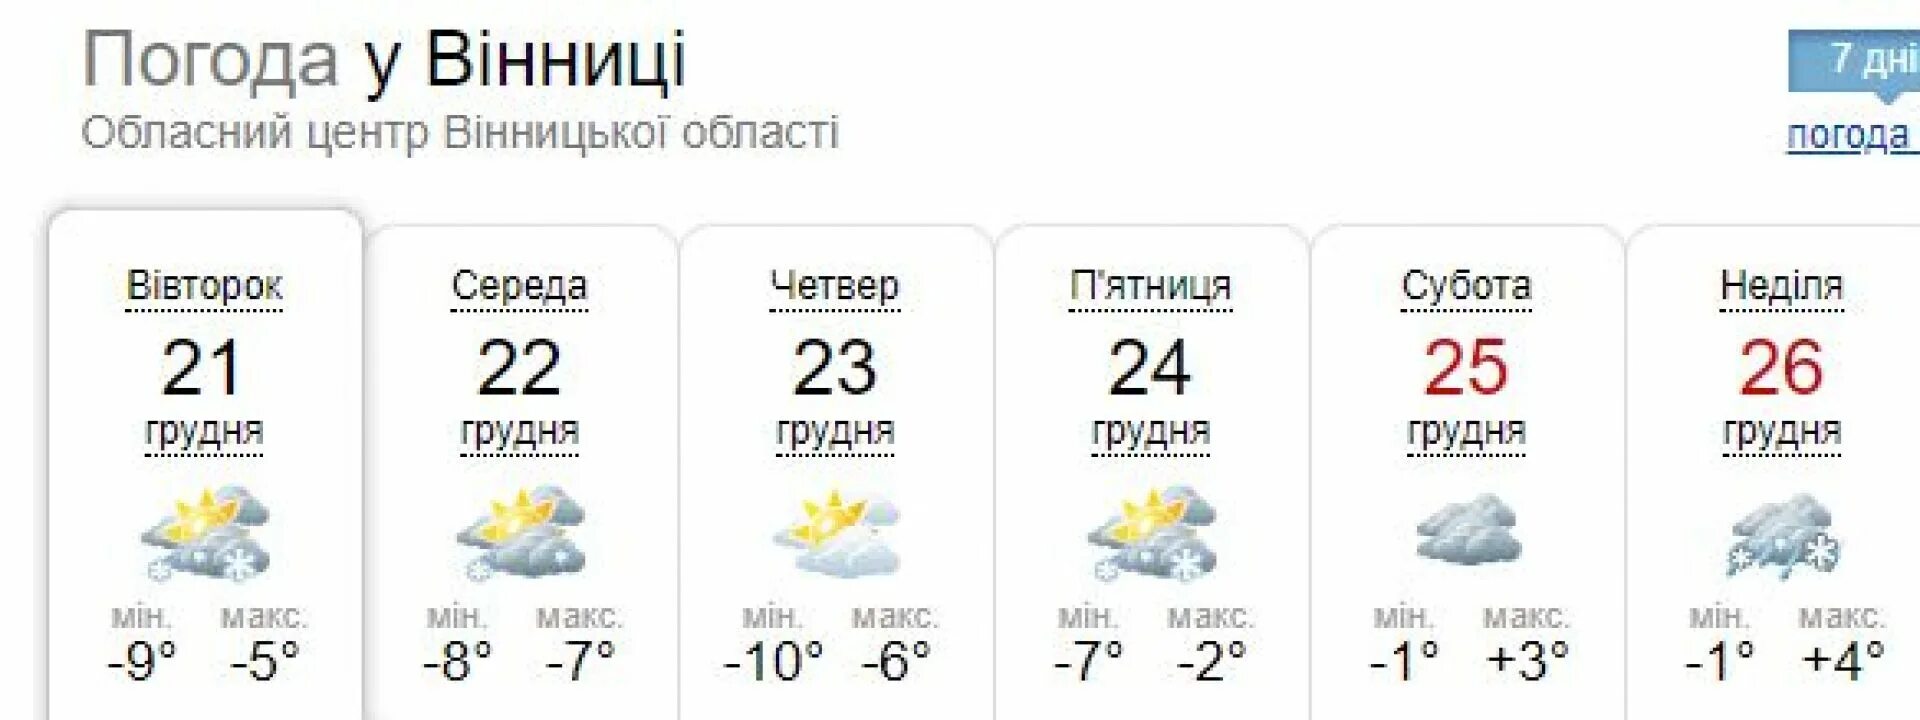 Погода 1 2 июня. Погода в Харцызске. Синоптик Харцызск. Погода в Чернигове. Погода Харцызск синоптик.